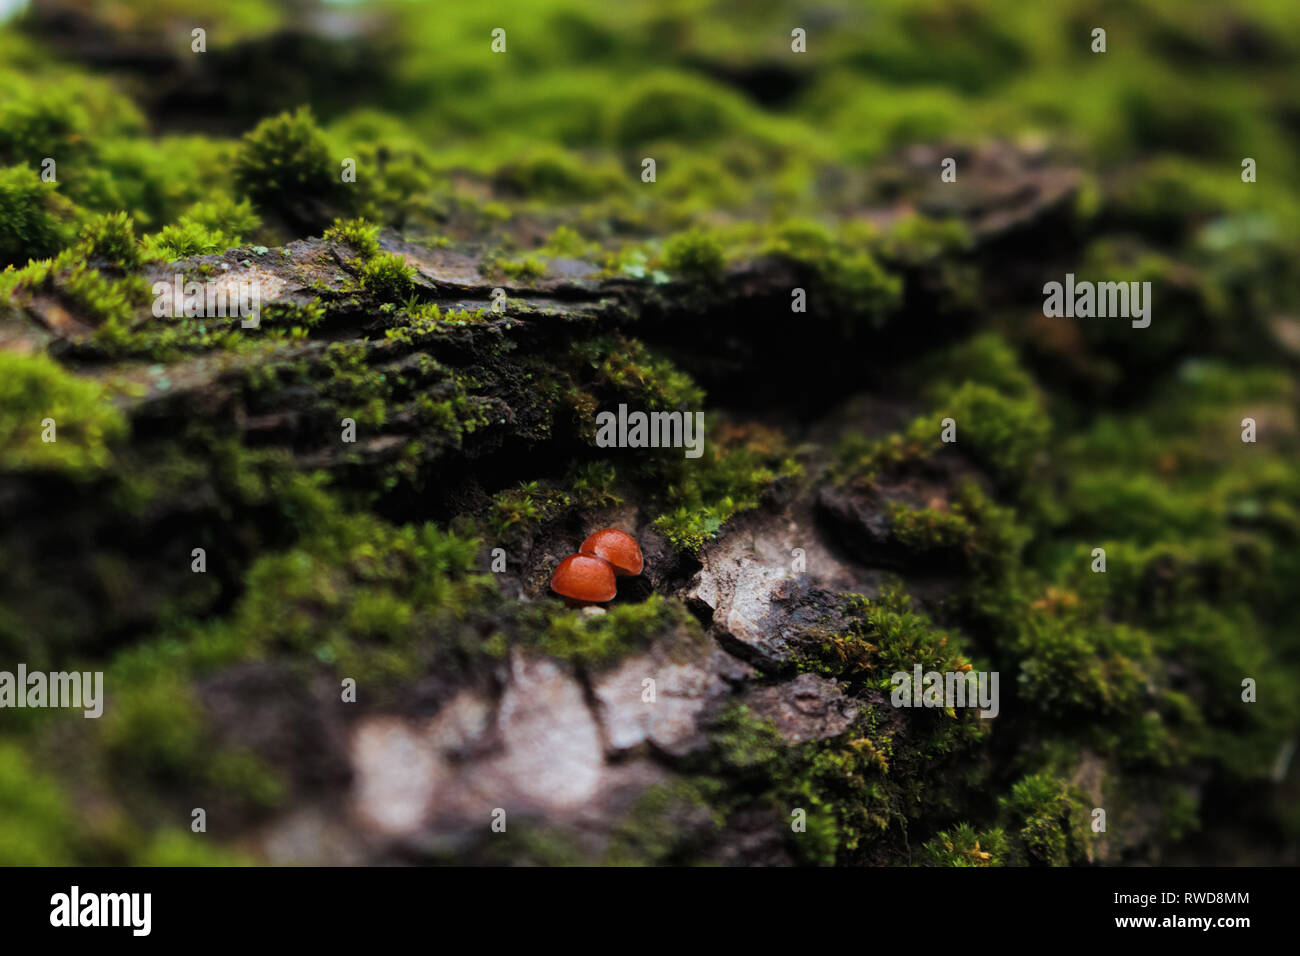 Tiny red mushrooms growing on bark close-up macro photography between green moss vegetation in Ukraine Stock Photo